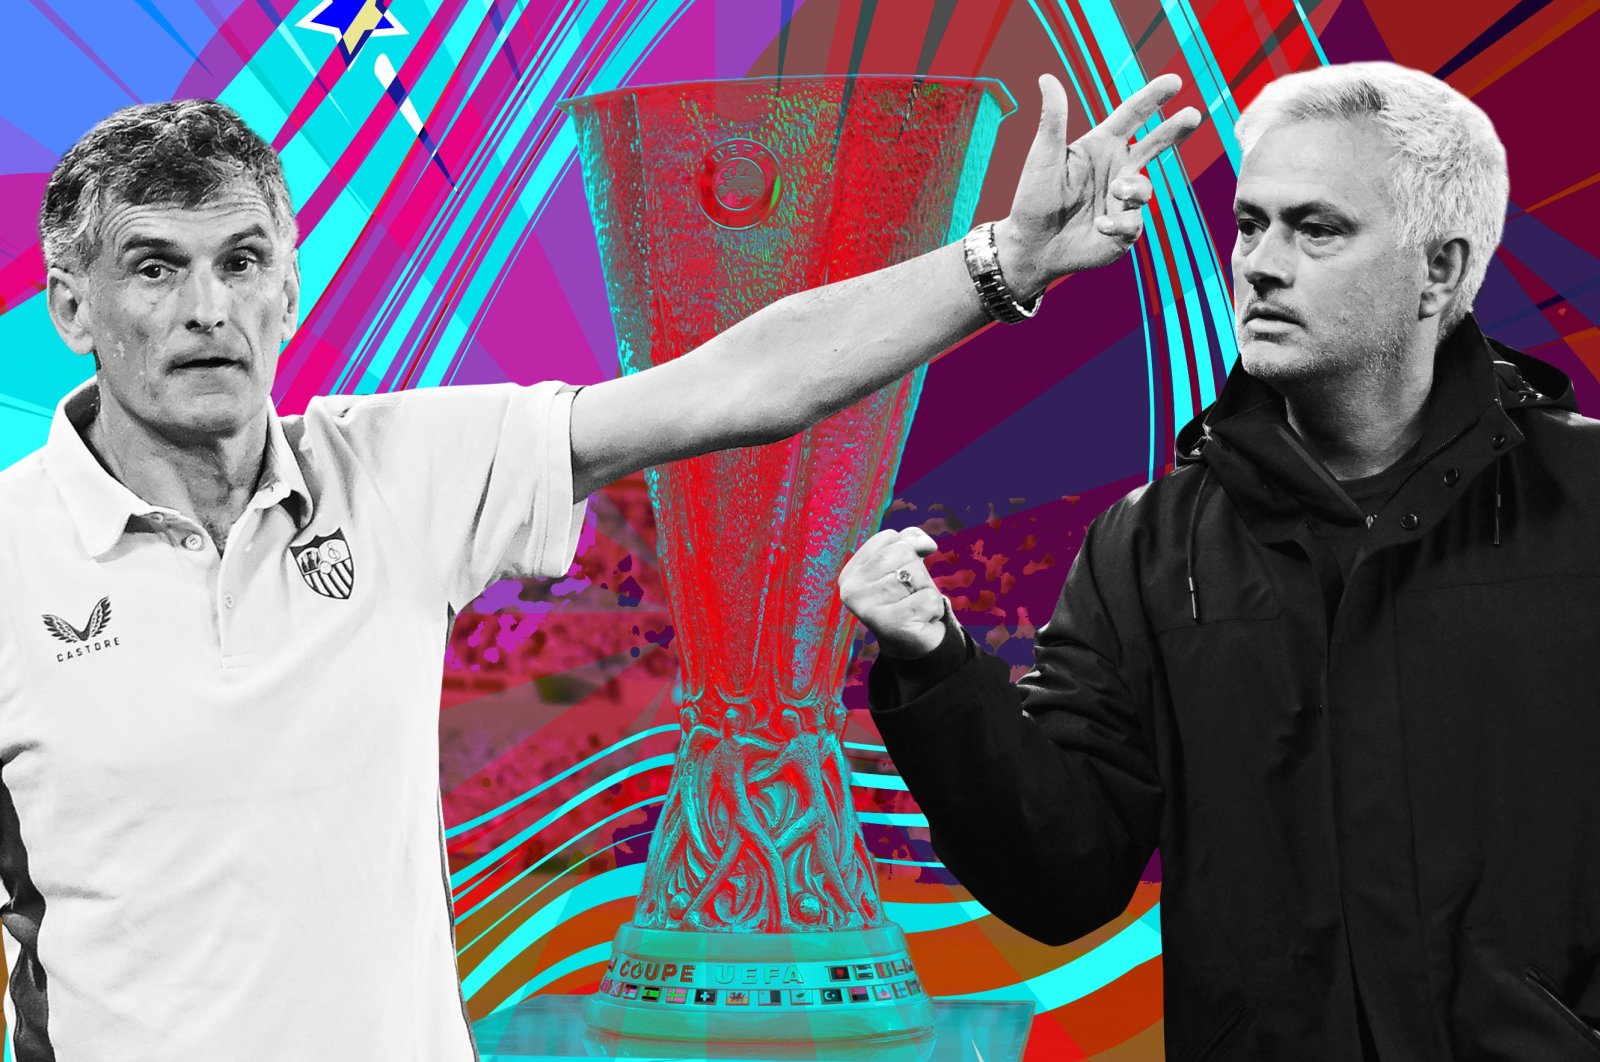 Sevilla coach Jose Luis Mendilibar (L) and Roma coach Jose Mourinho will face each other in the final. (Illustration by Büşra Öztürk)